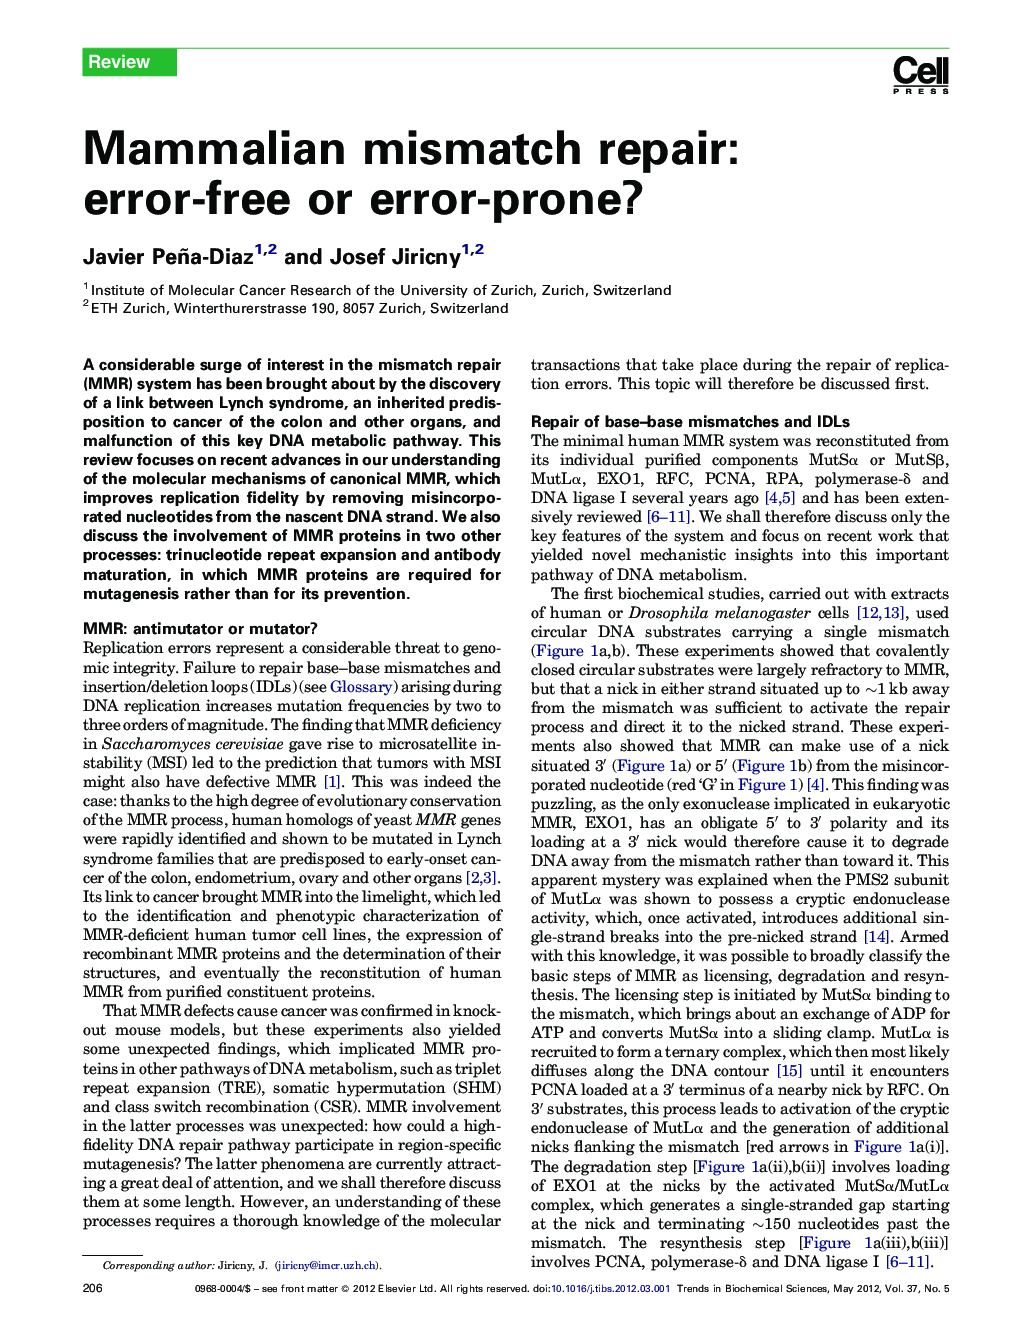 Mammalian mismatch repair: error-free or error-prone?